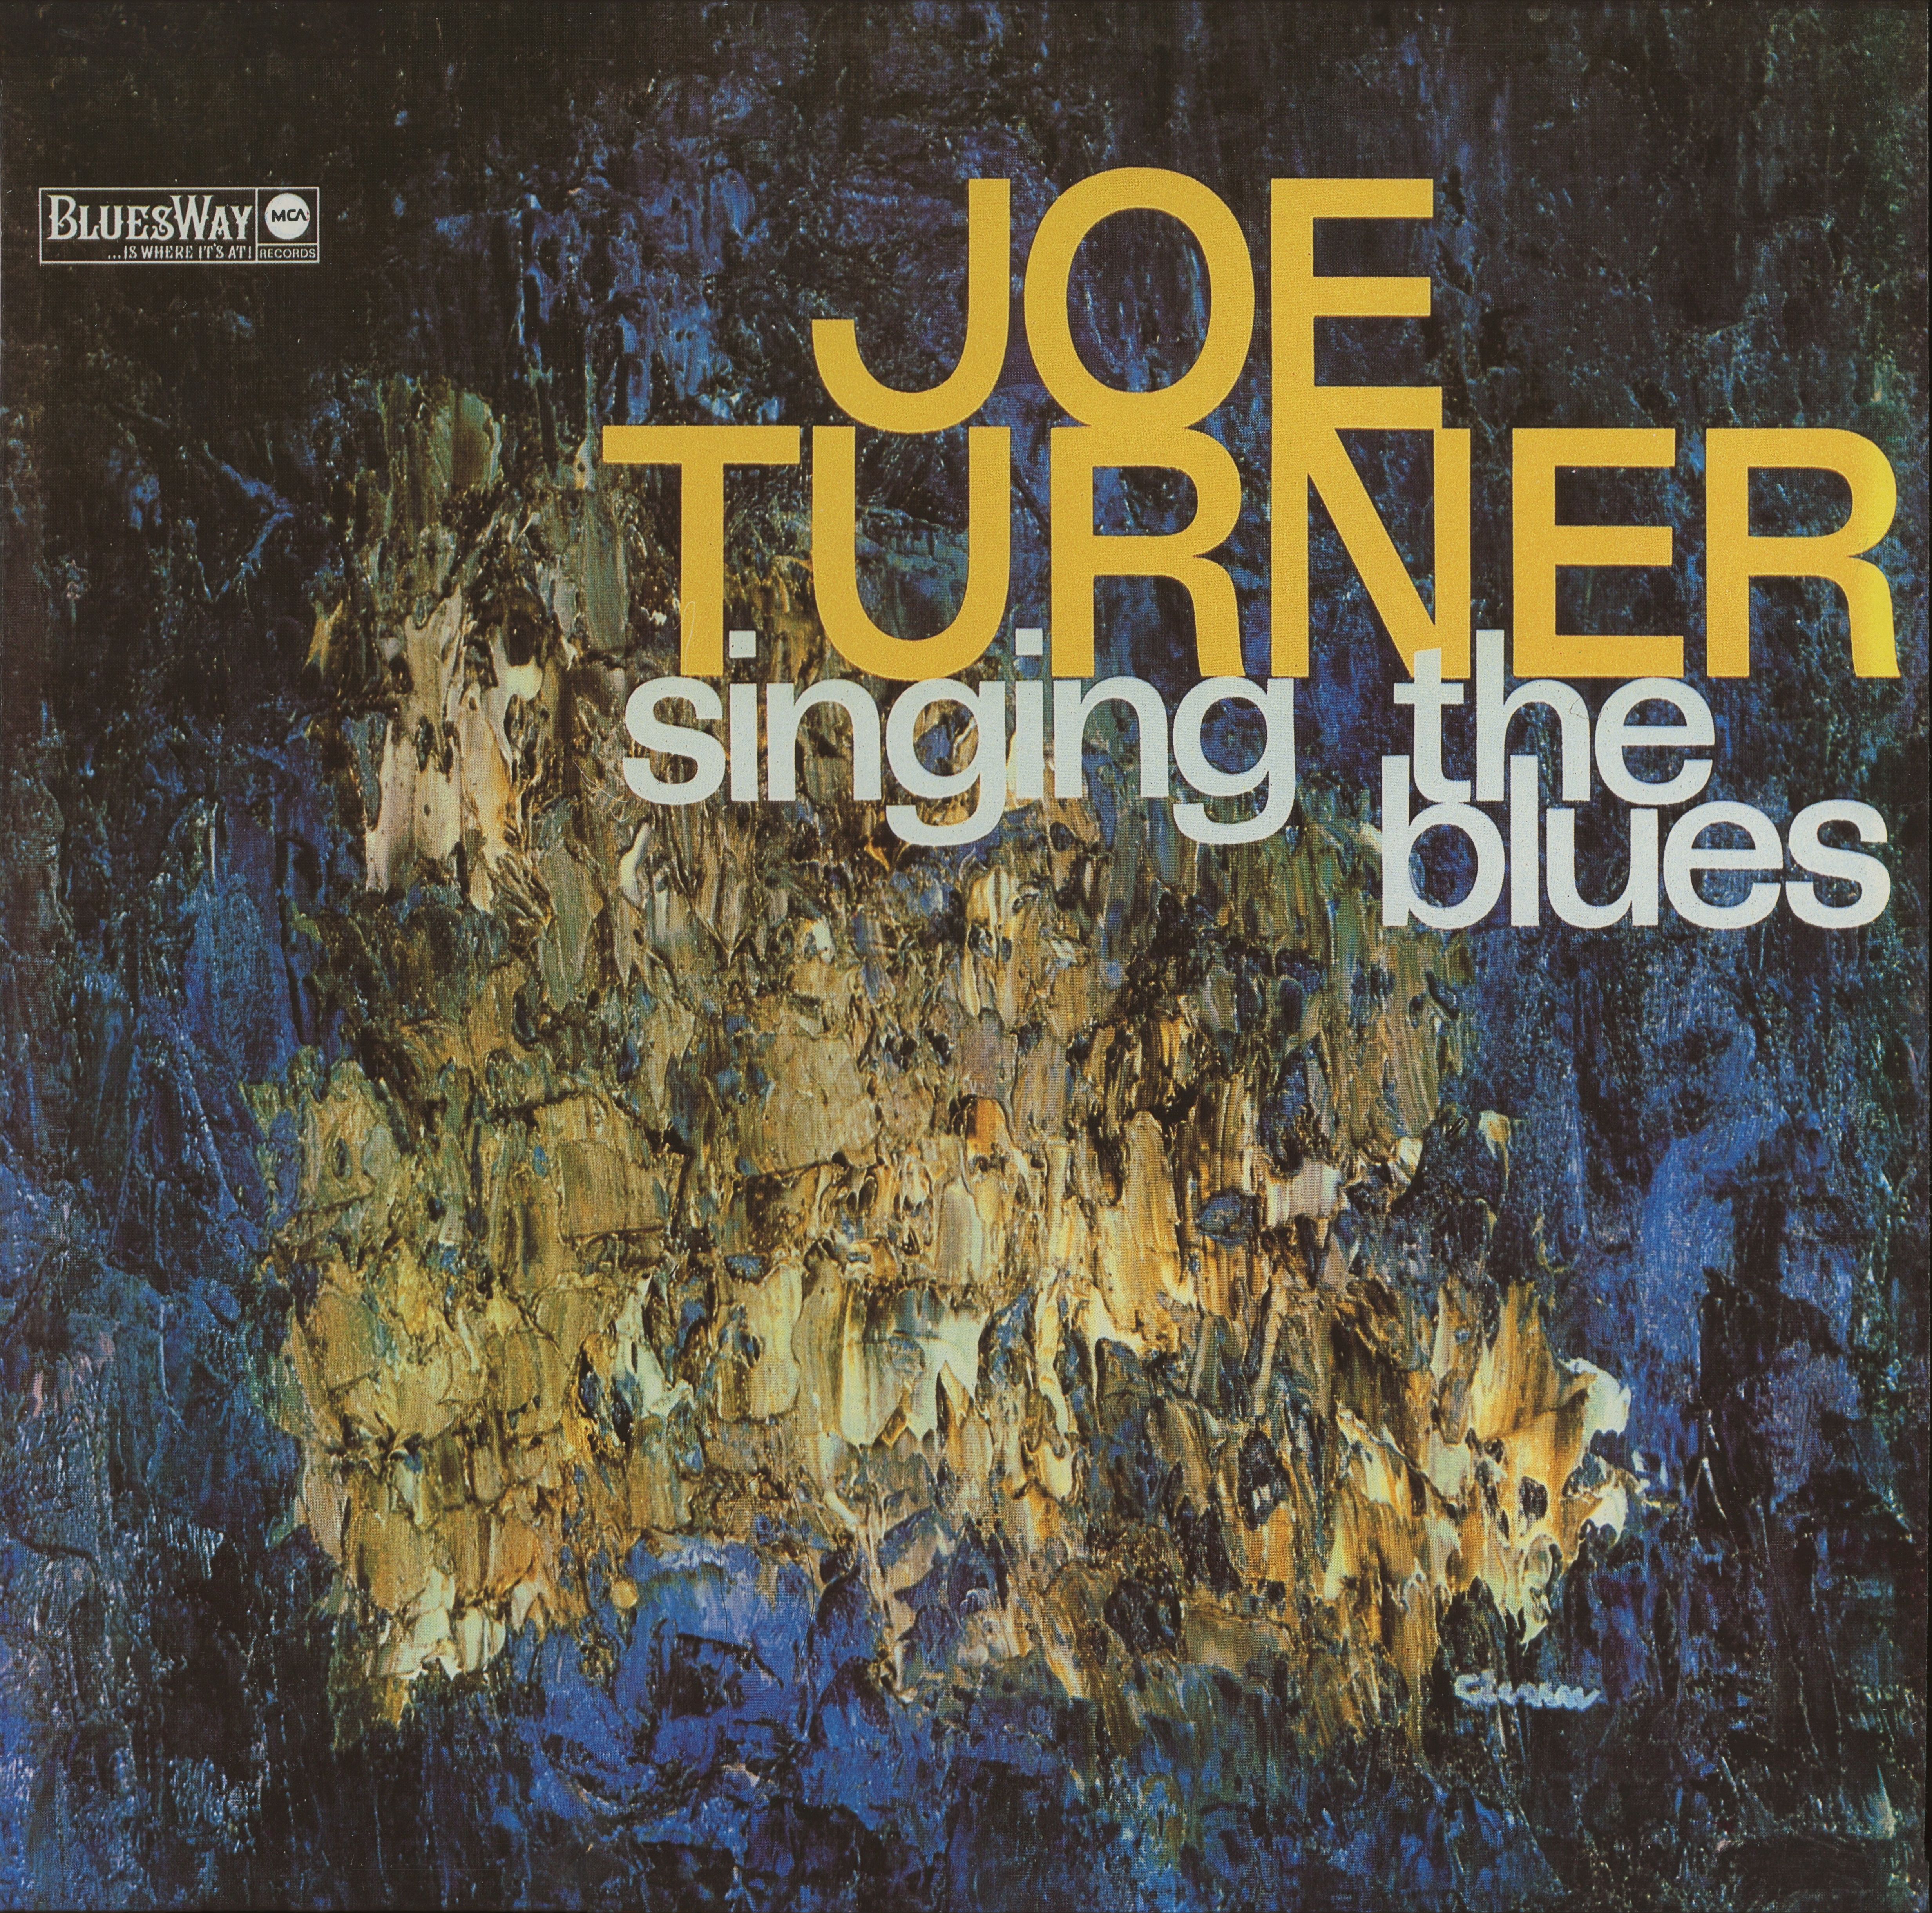 Singing the blues. Big Joe Turner the Blues collection. BLUESWAY. Joseph LP Somebody.